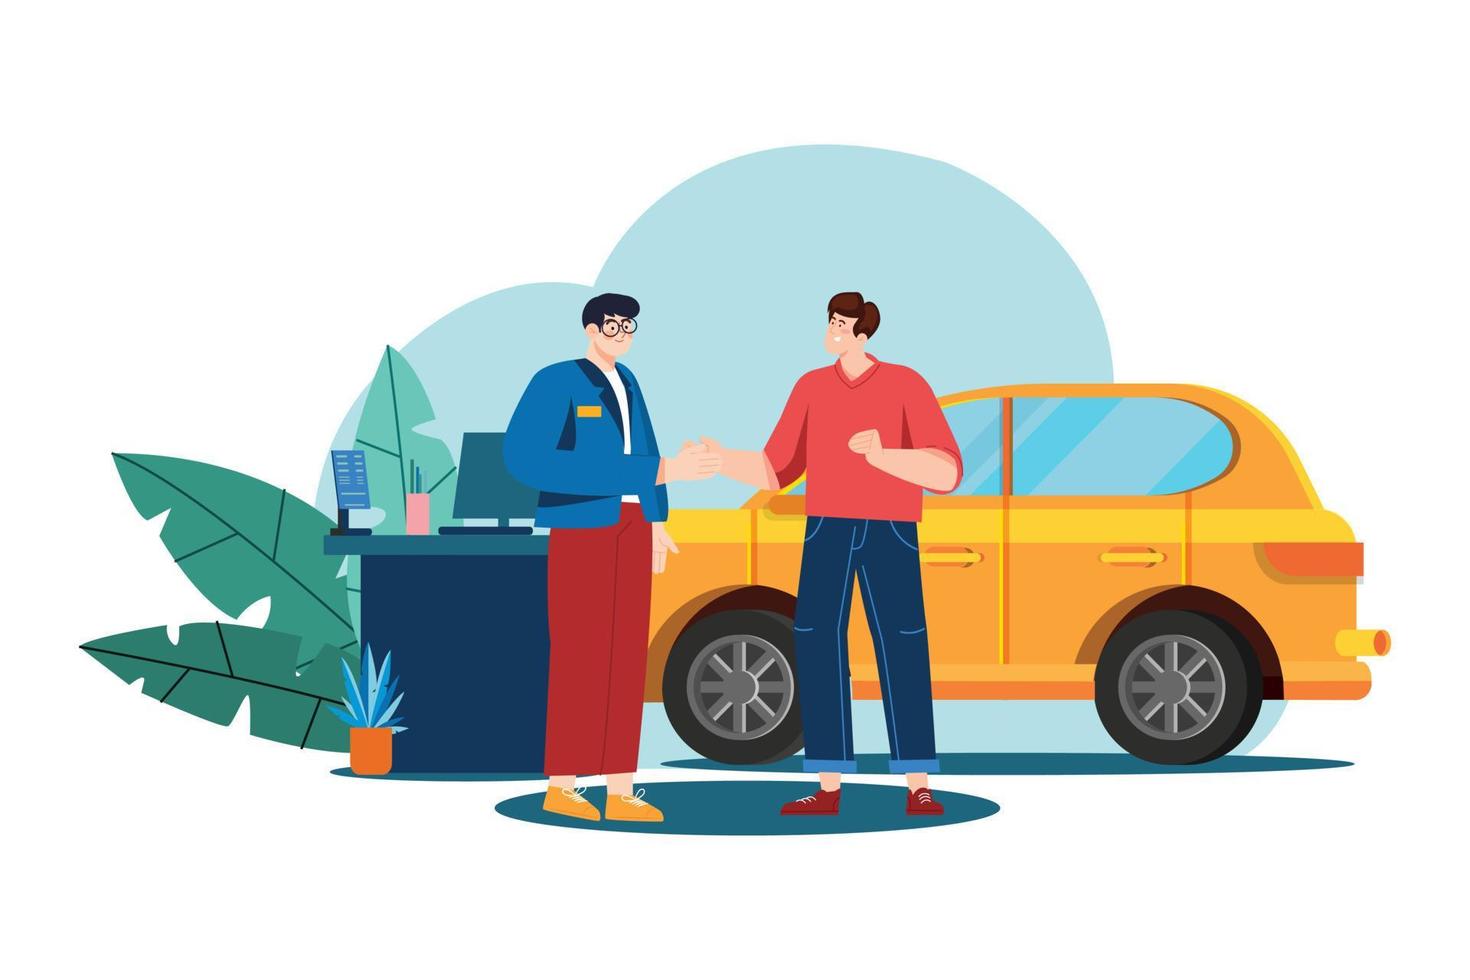 Car dealership seller greeting customer vector